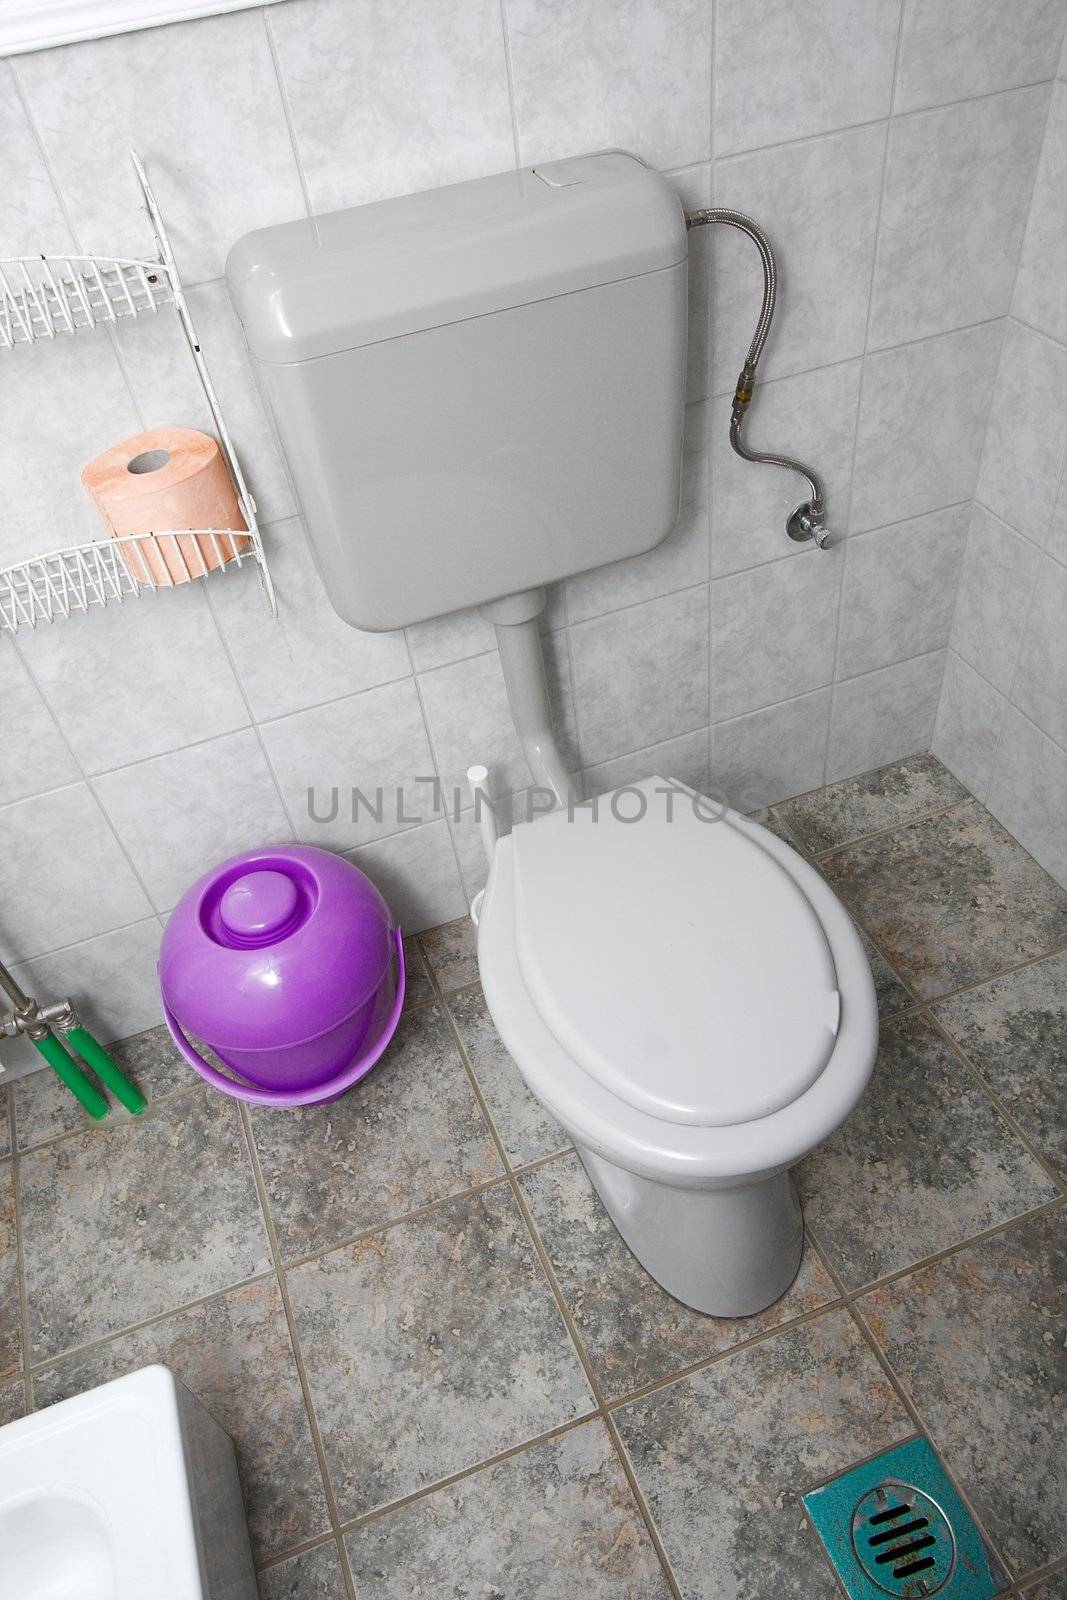 Toilet in a household bathroom